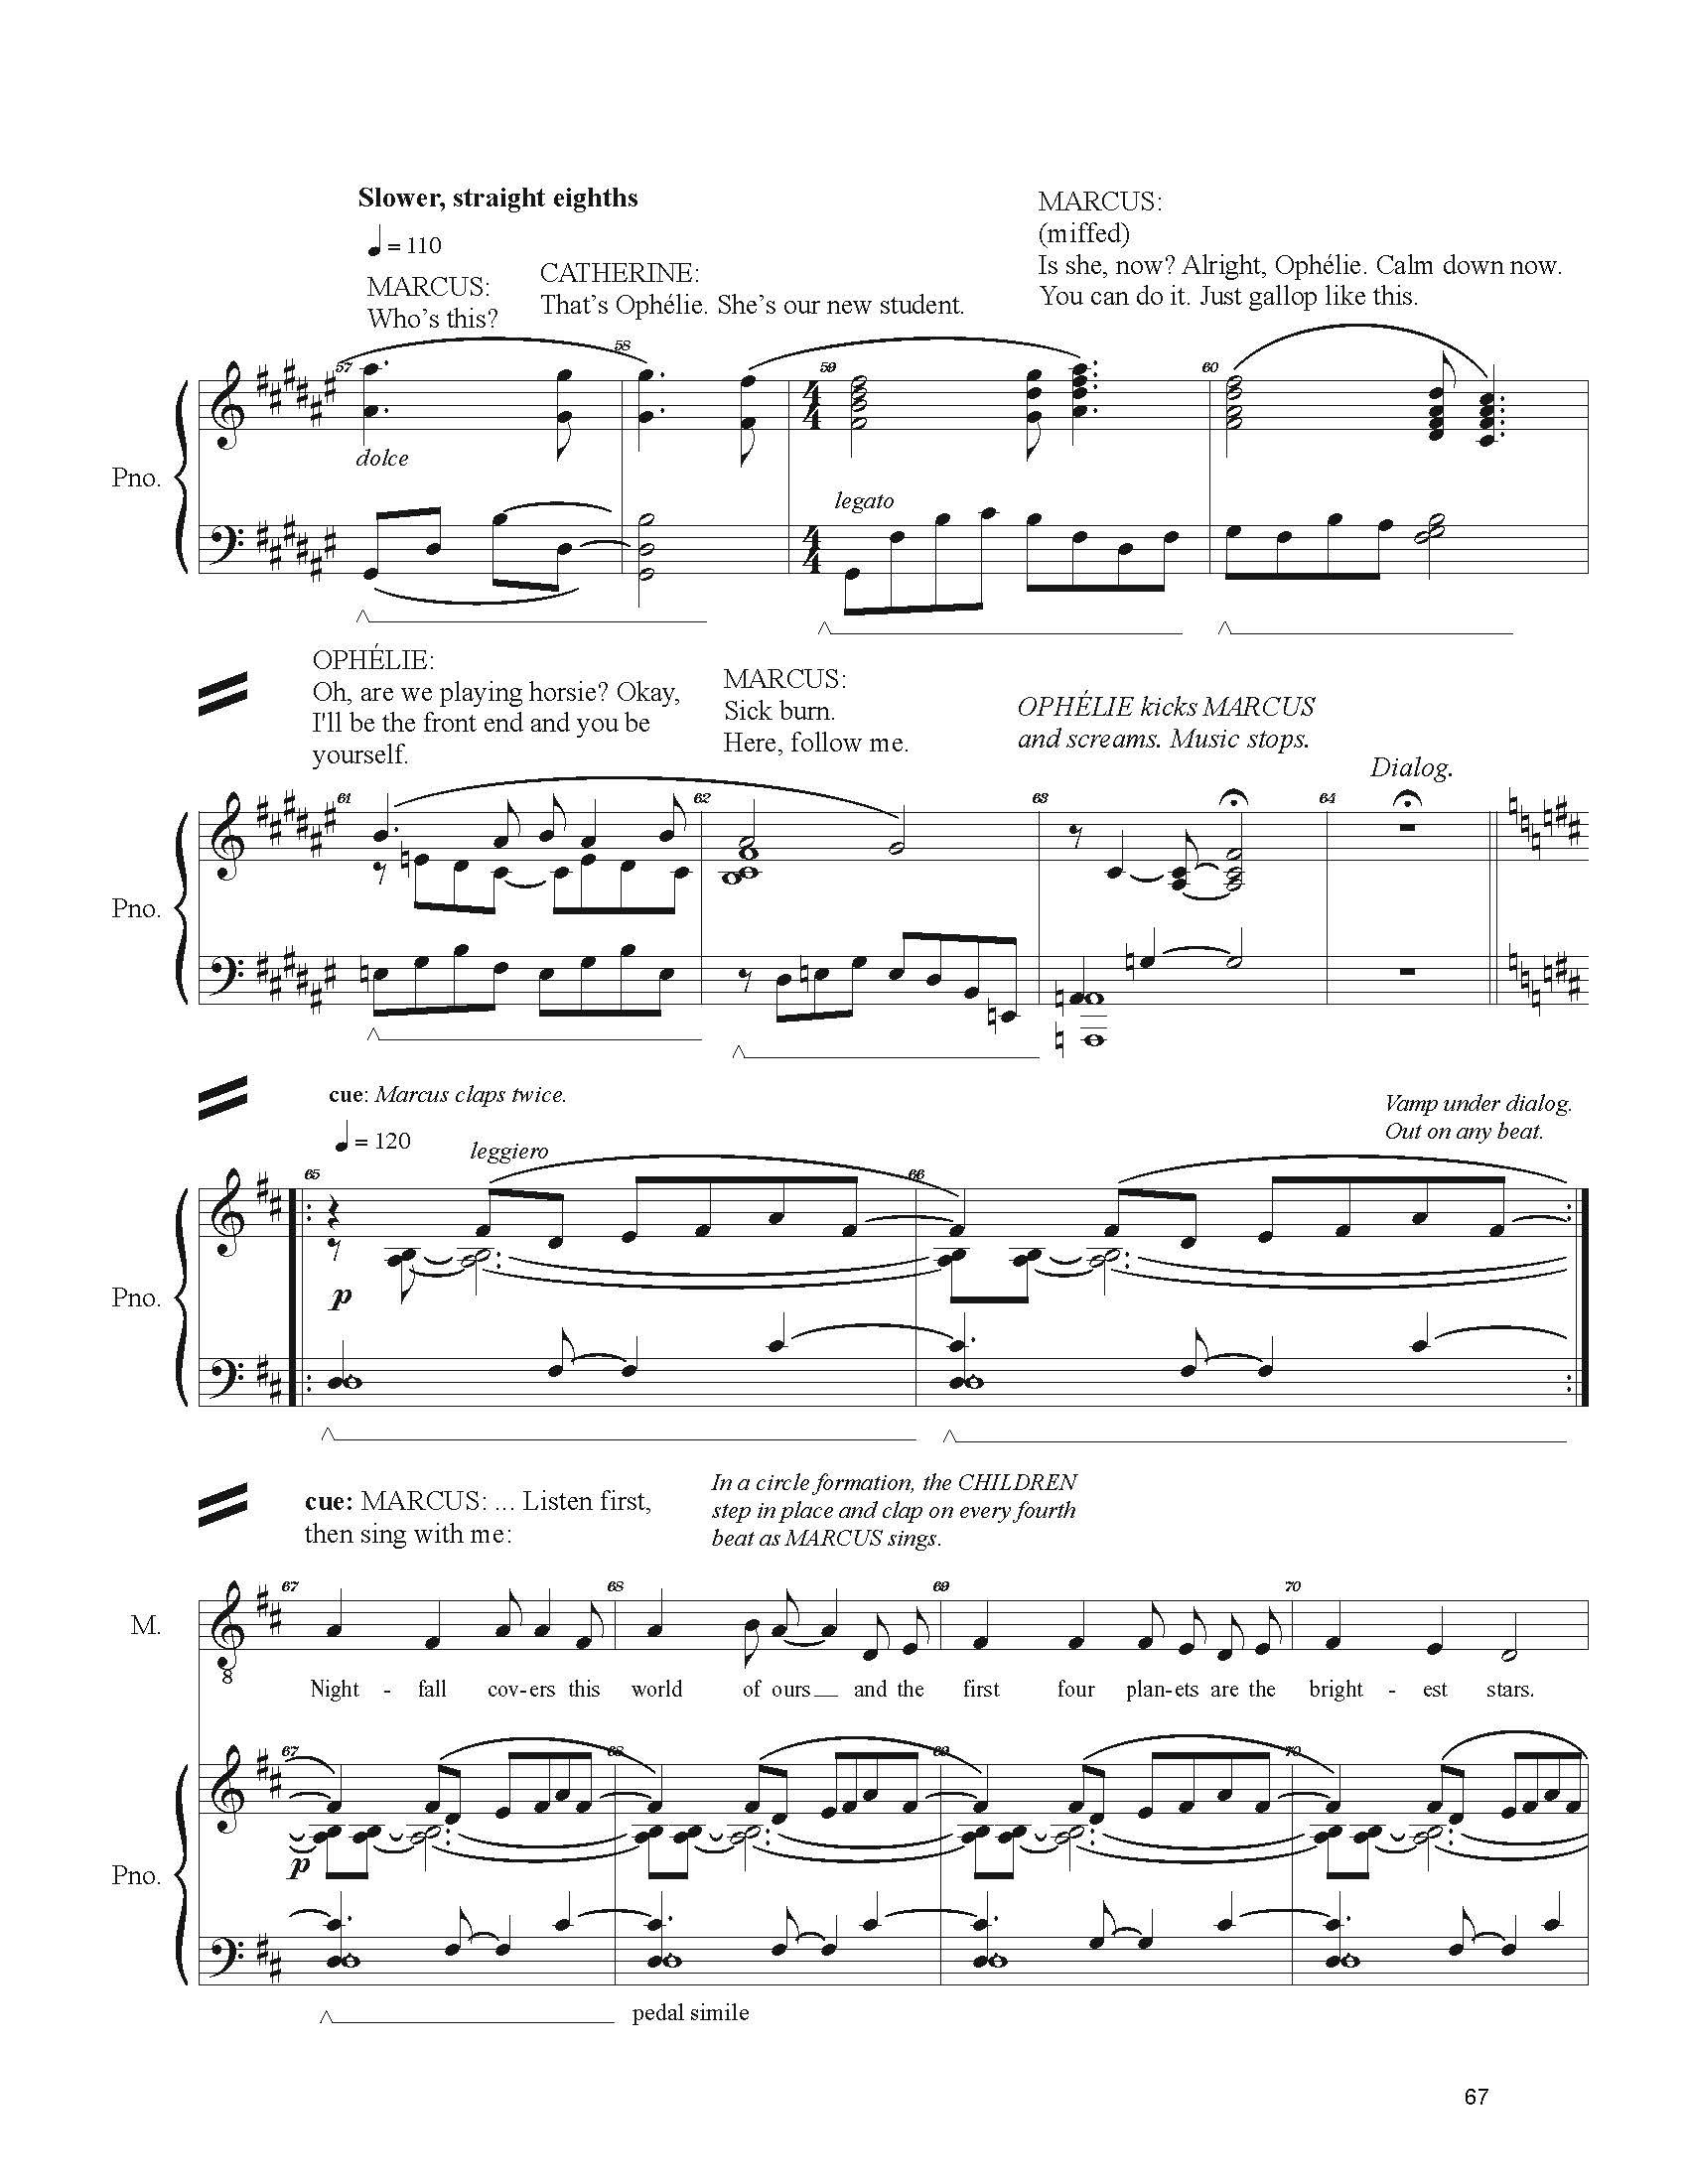 FULL PIANO VOCAL SCORE DRAFT 1 - Score_Page_067.jpg